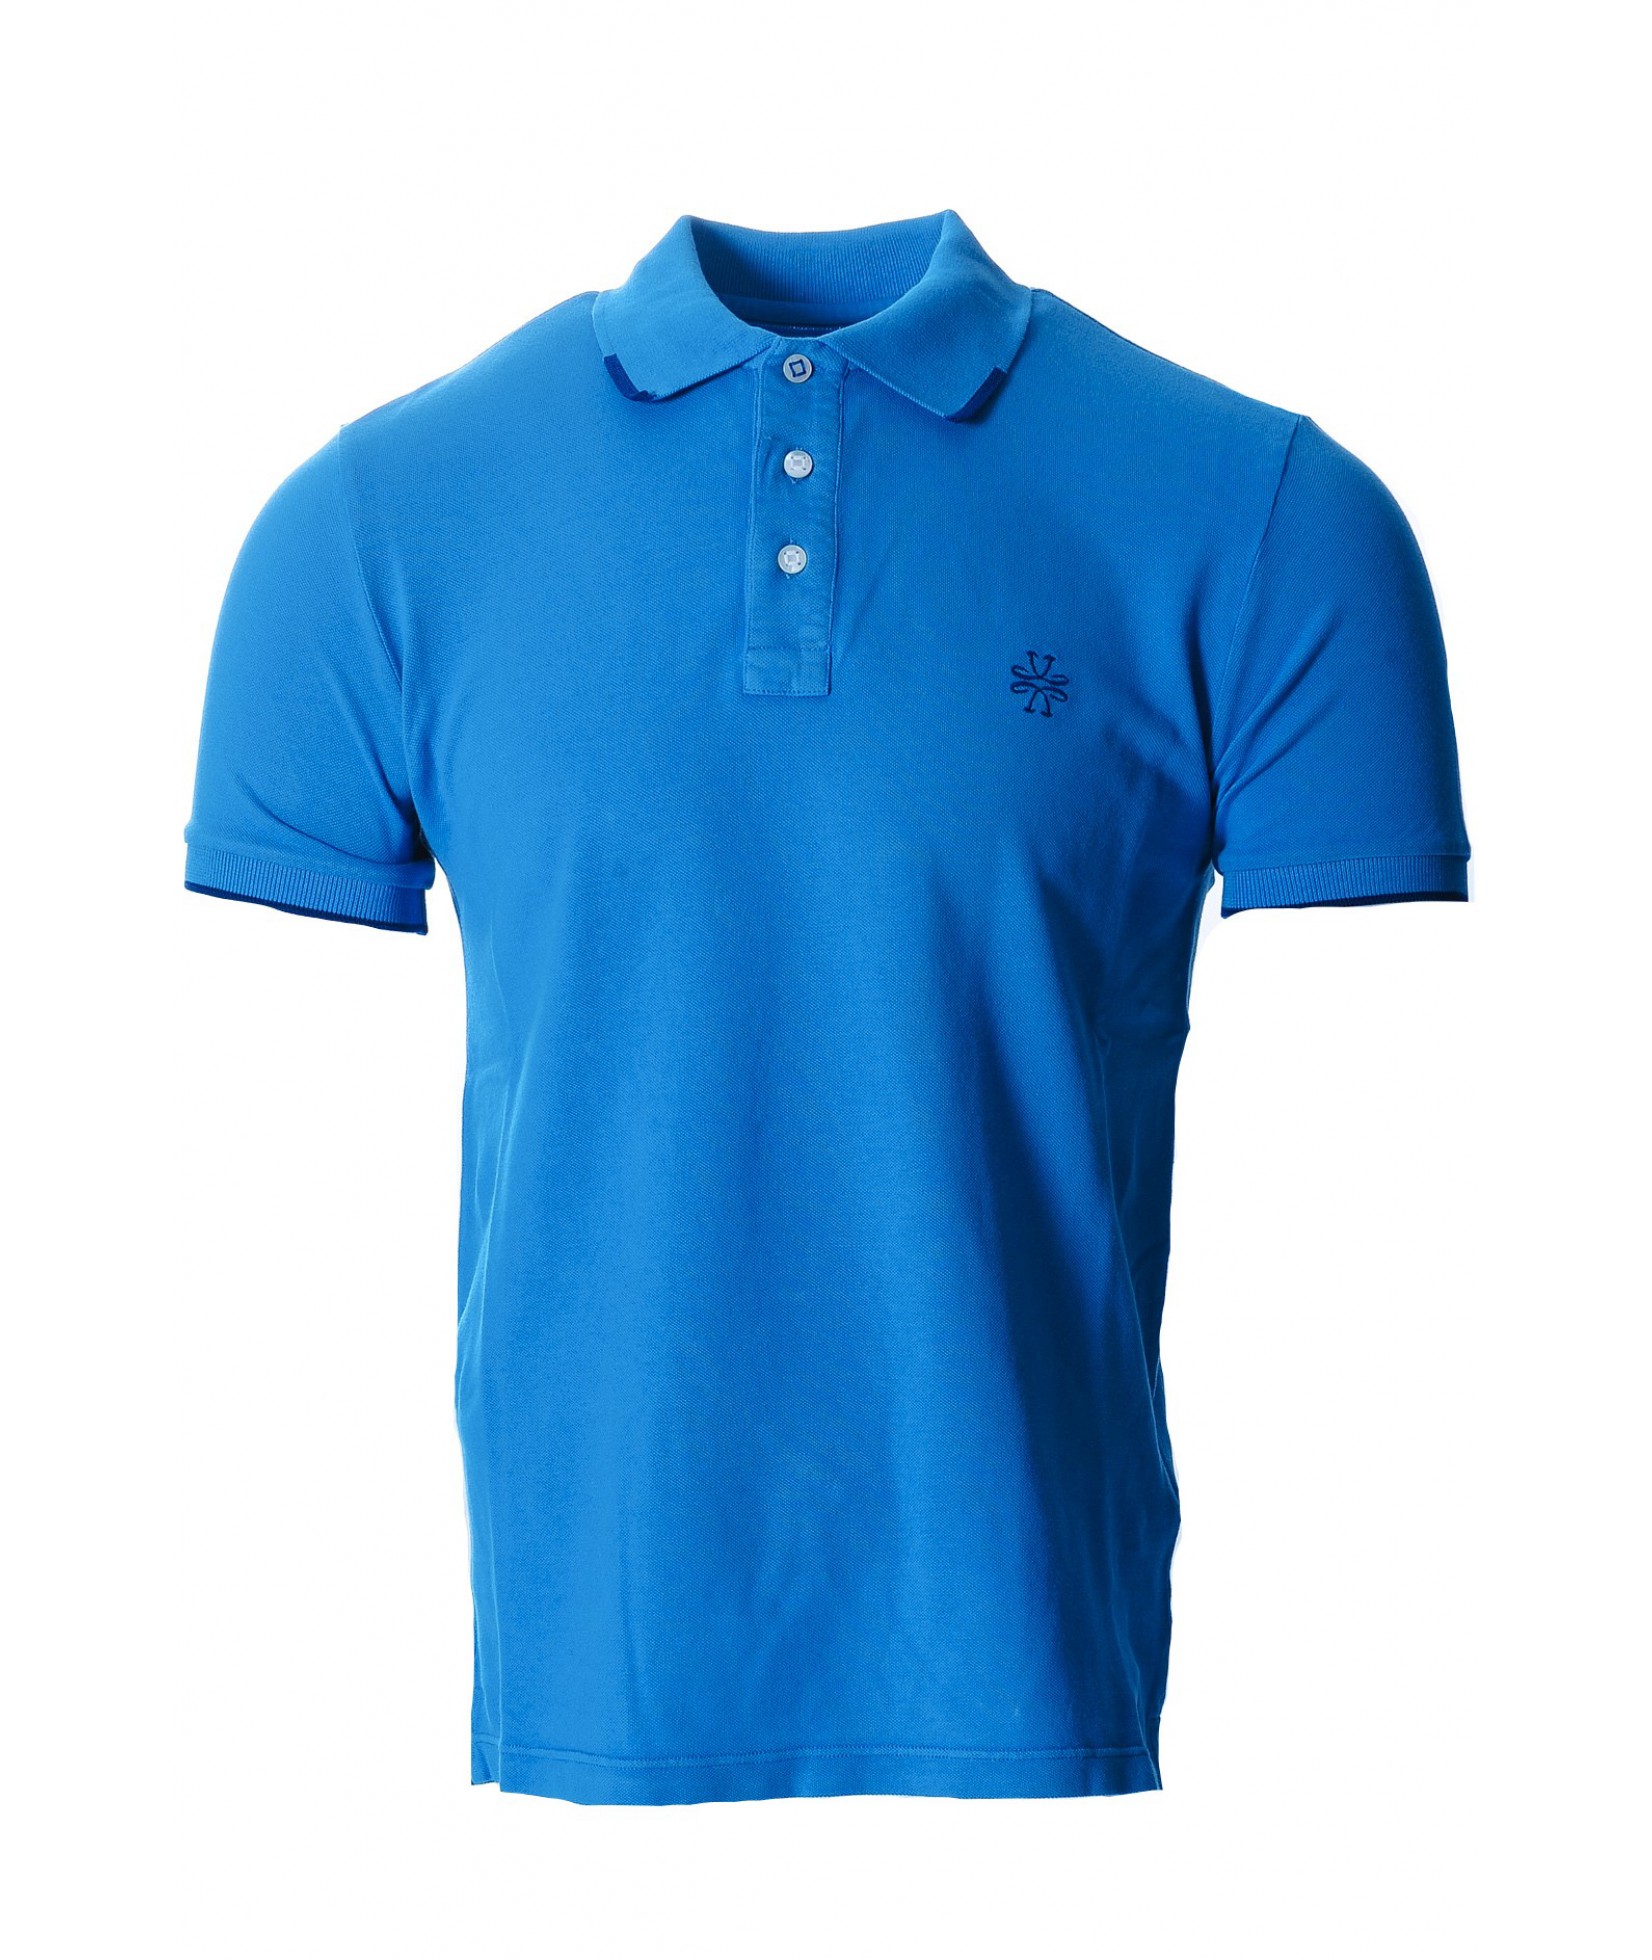 Jacob Cohën Polo shirt Blau (35618)